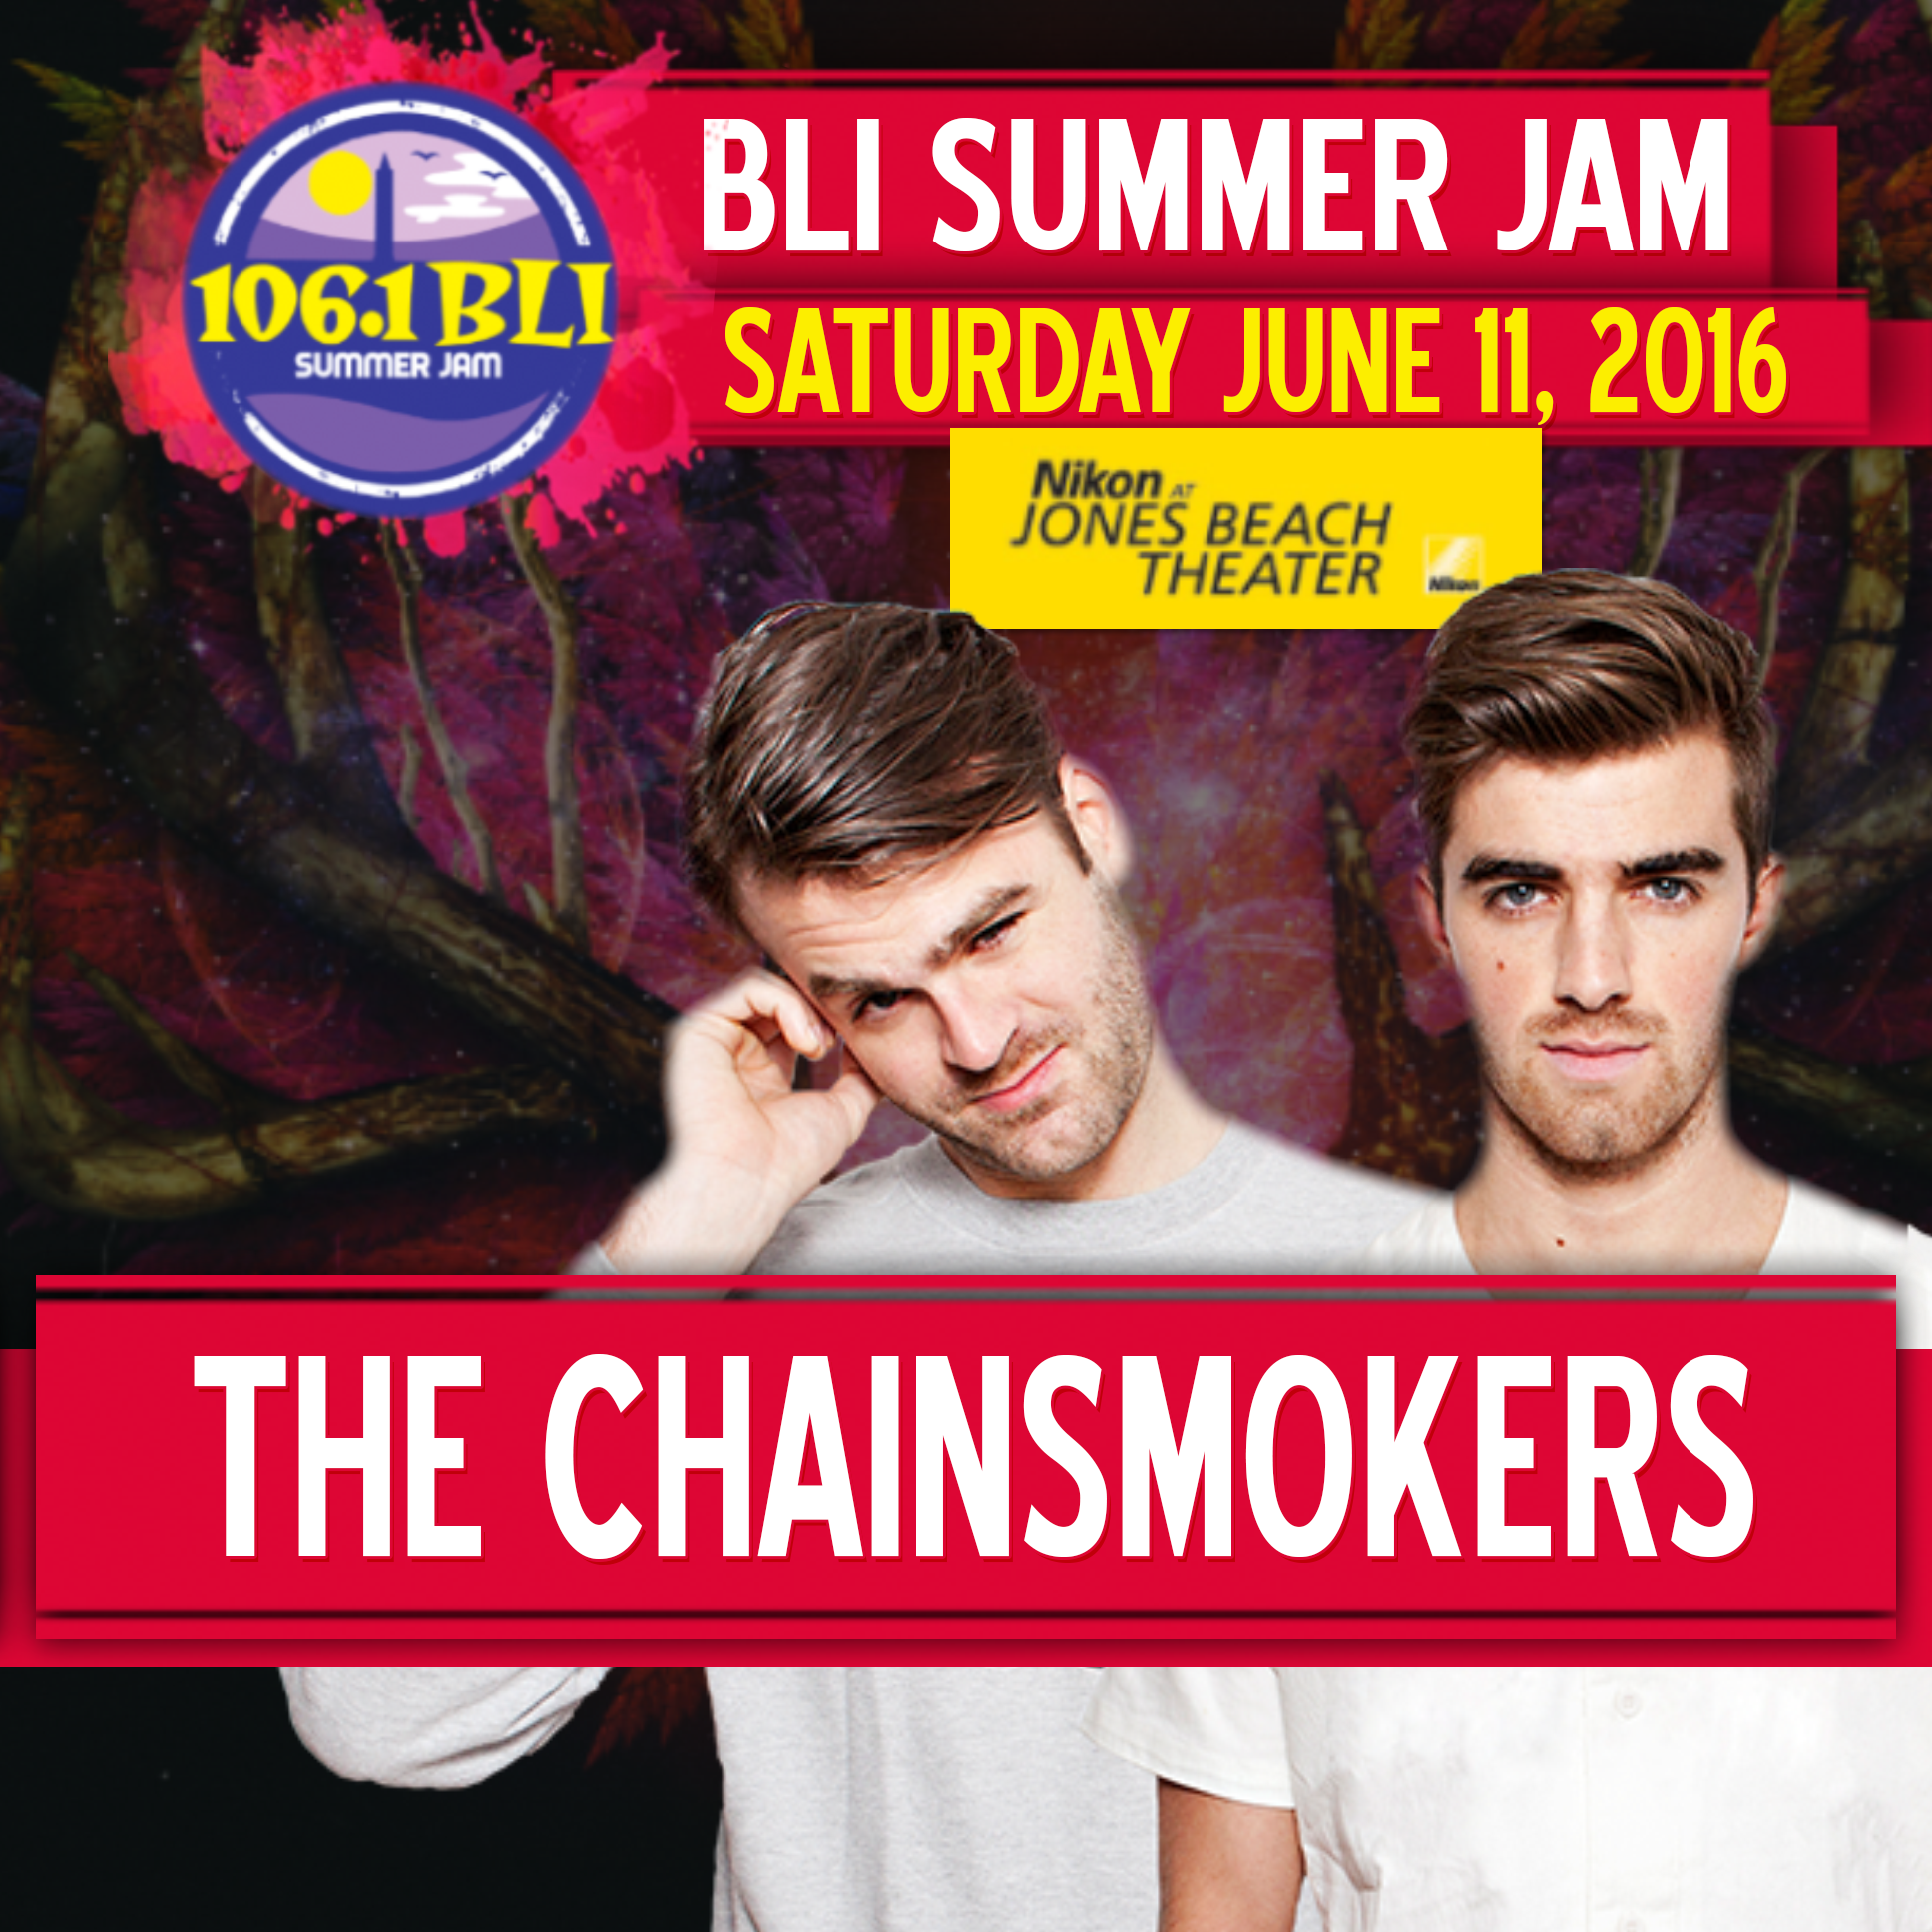 PICS The Chainsmokers at BLI Summer Jam 106.1 BLI